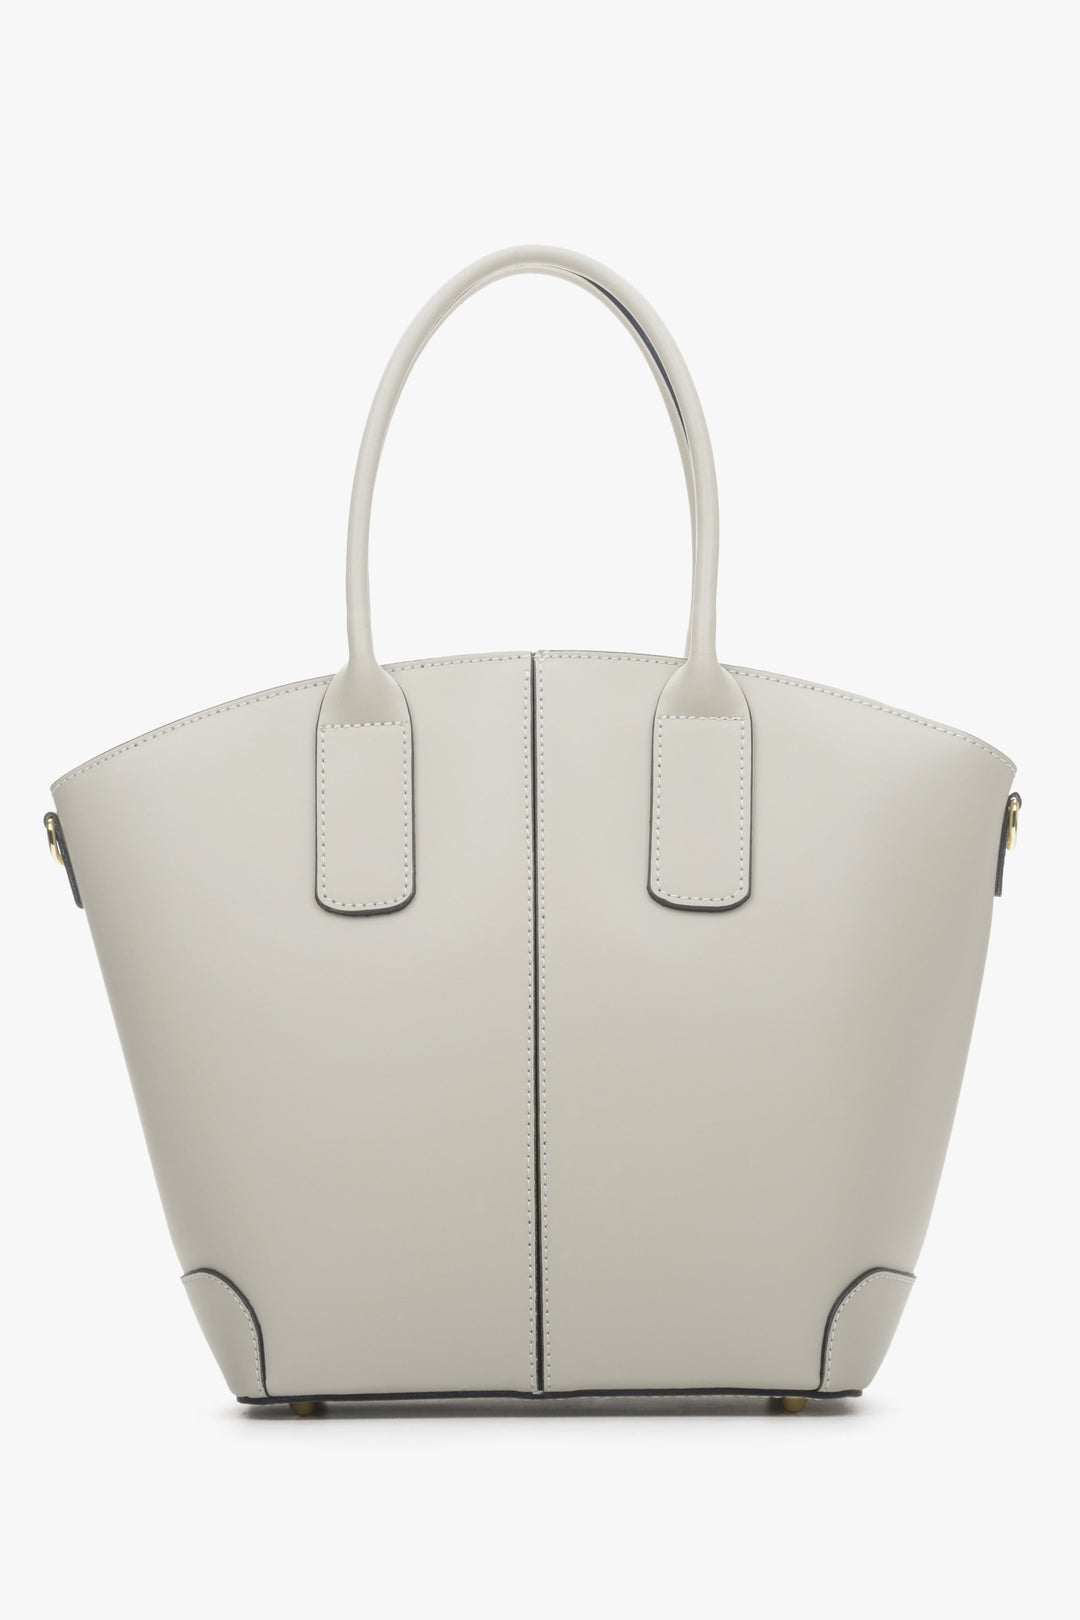 Estro women's light beige shopper bag made of Italian genuine leather